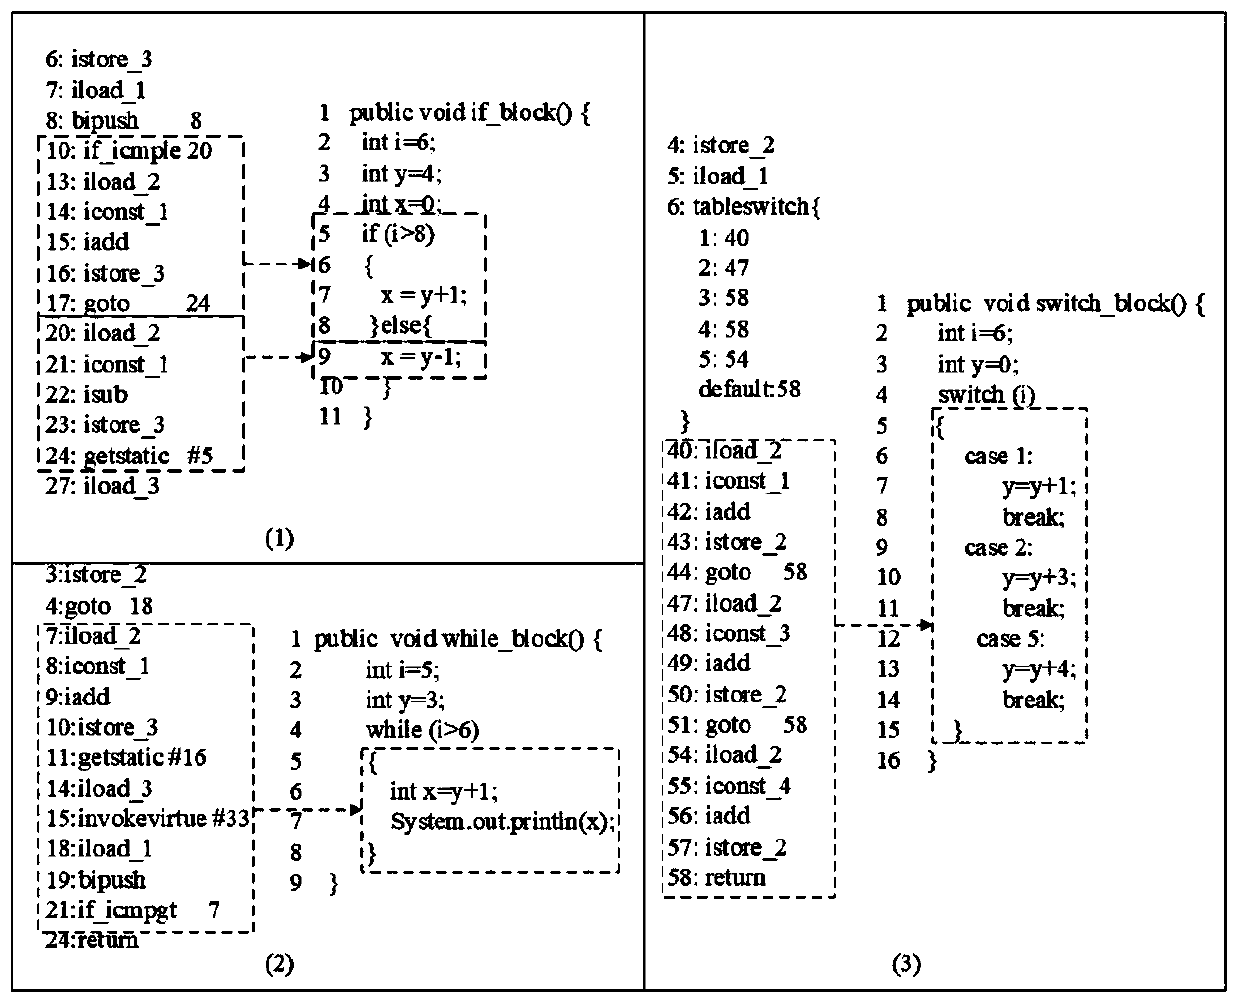 Java statement block cloning detection method based on bytecode sequence matching